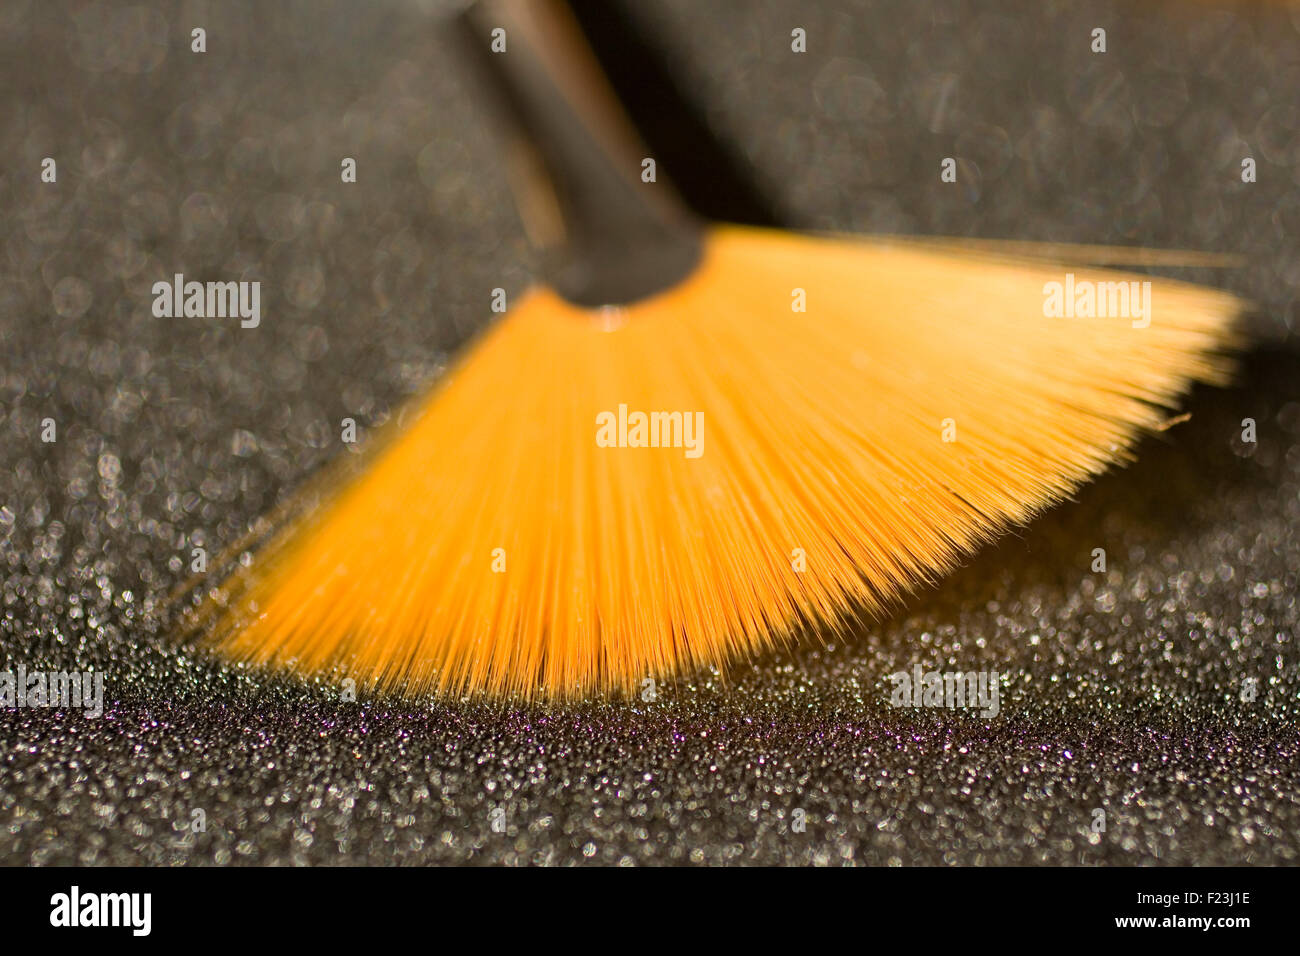 Fan shaped paintbrushes on anthracite background Stock Photo